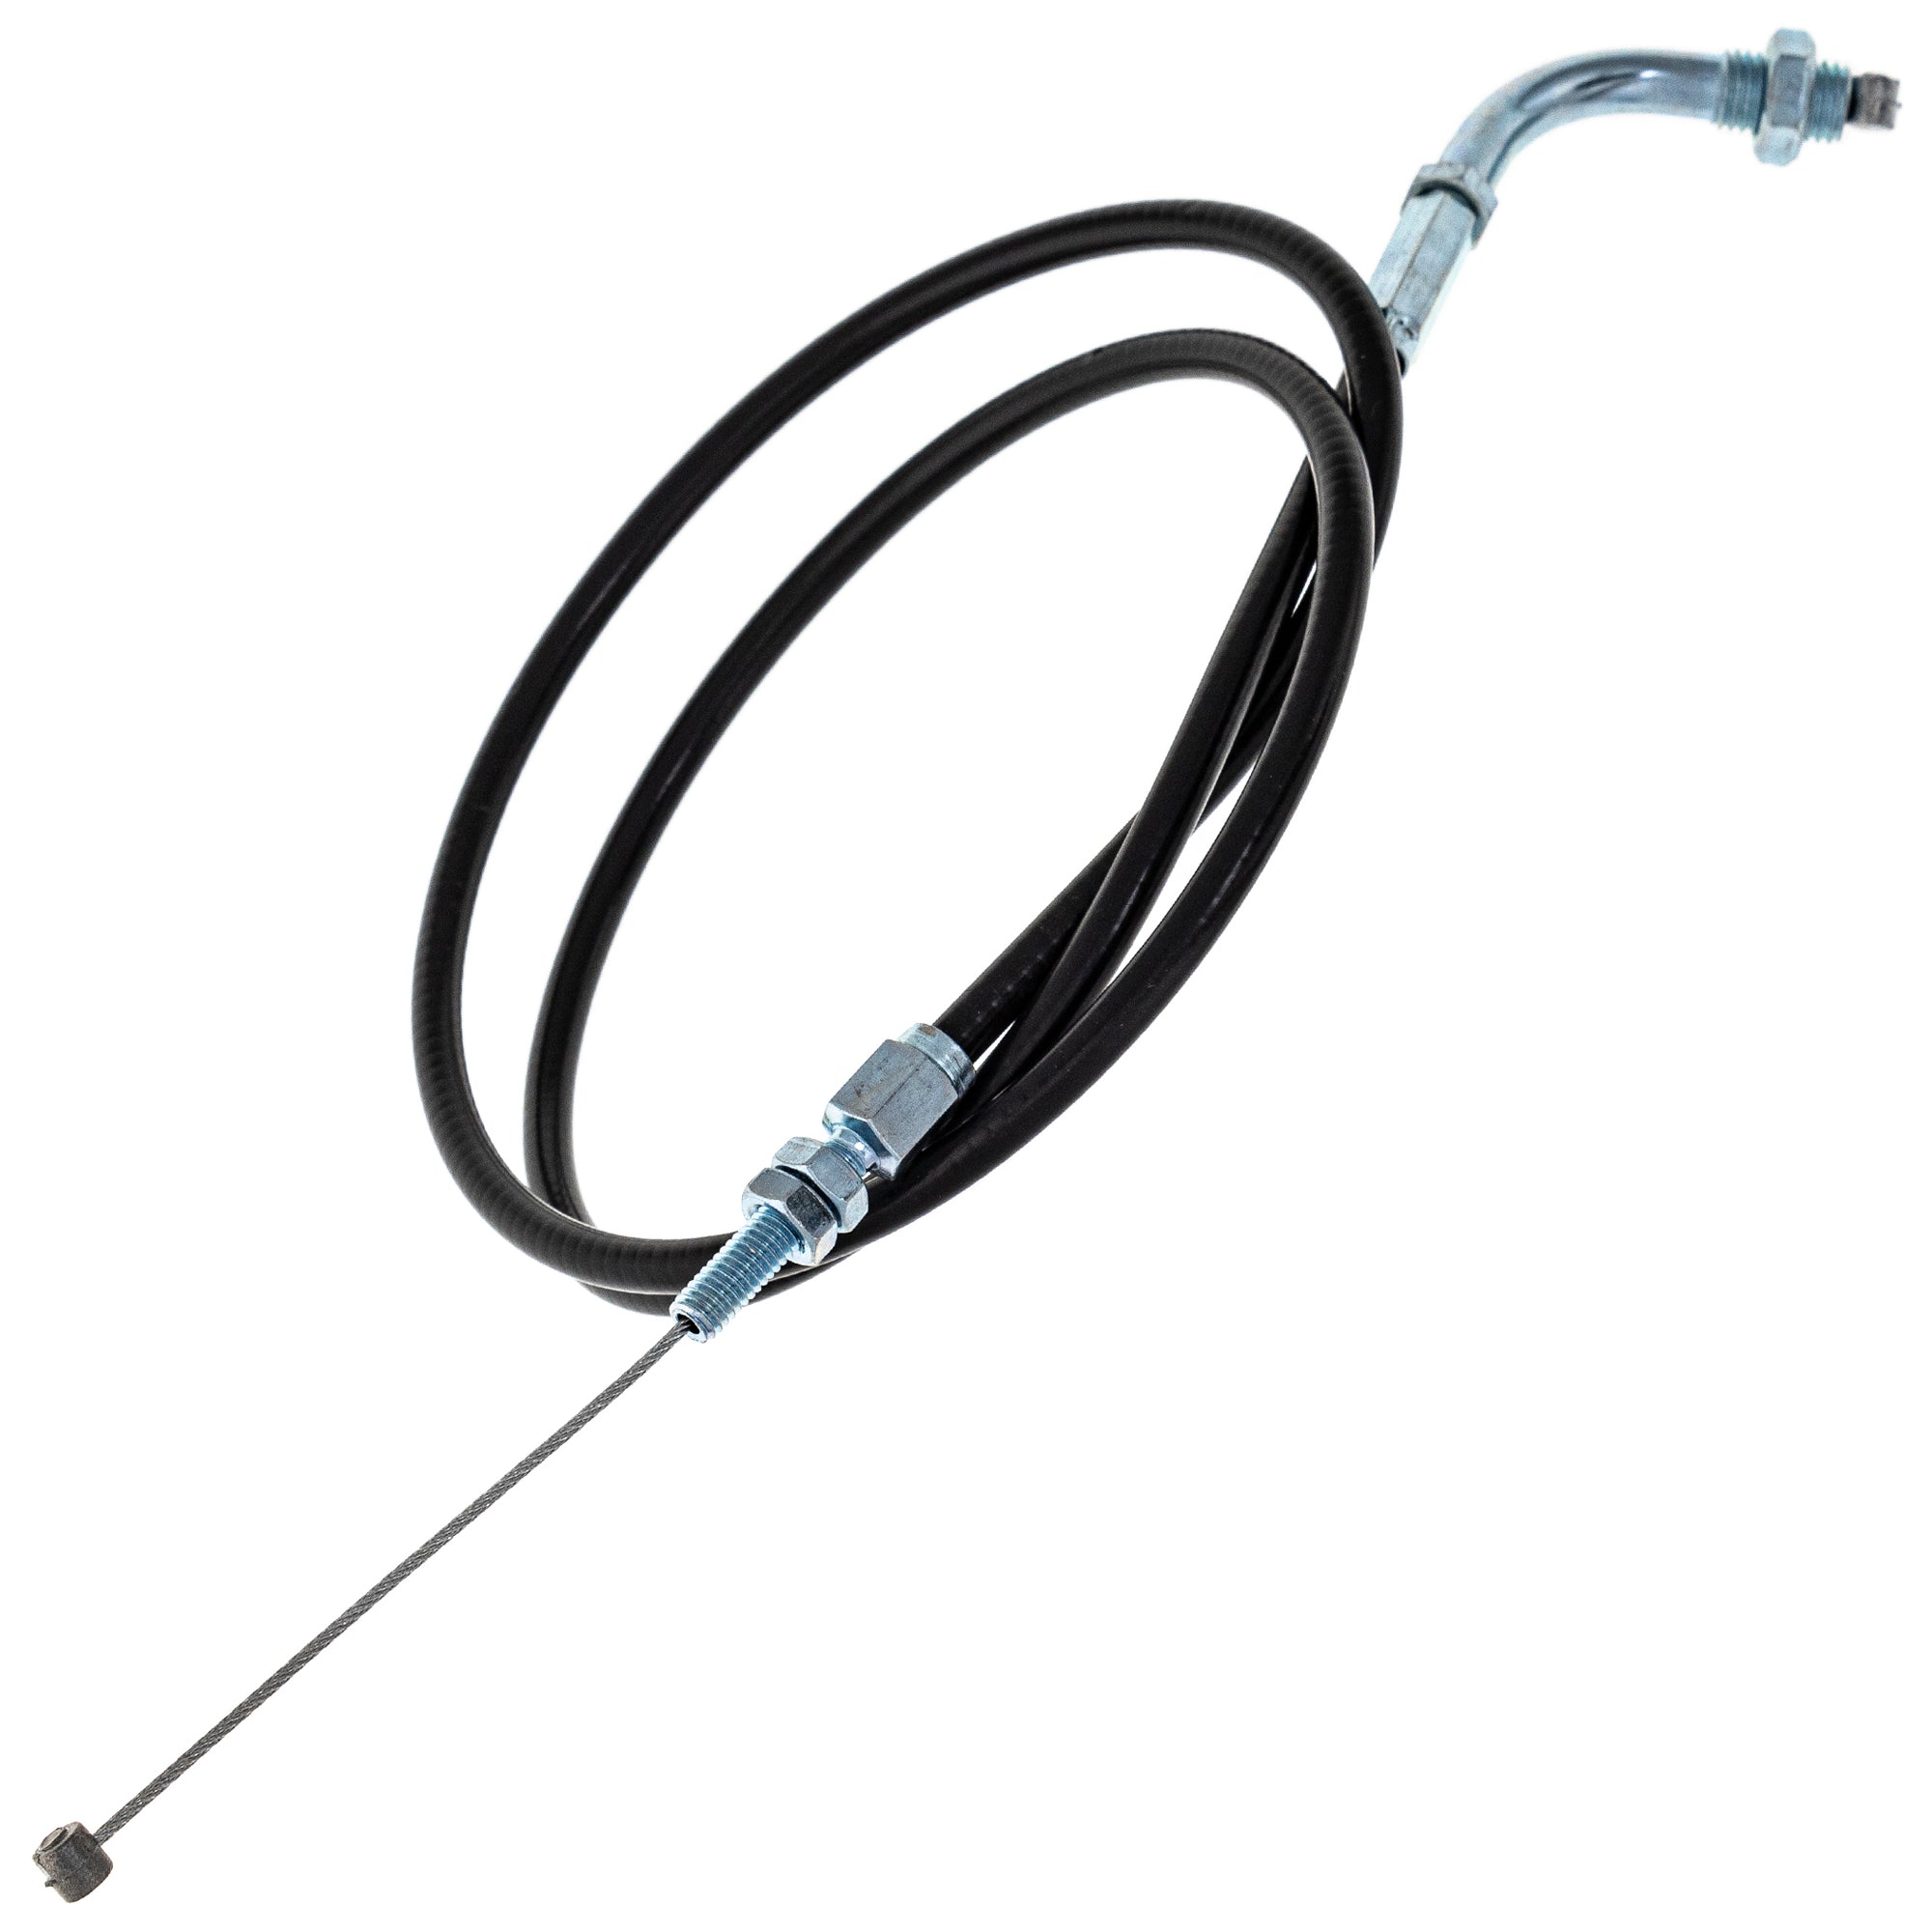 Throttle Cable for Kawasaki KZ1000 KZ1000 KZ550 KZ650 54012-149